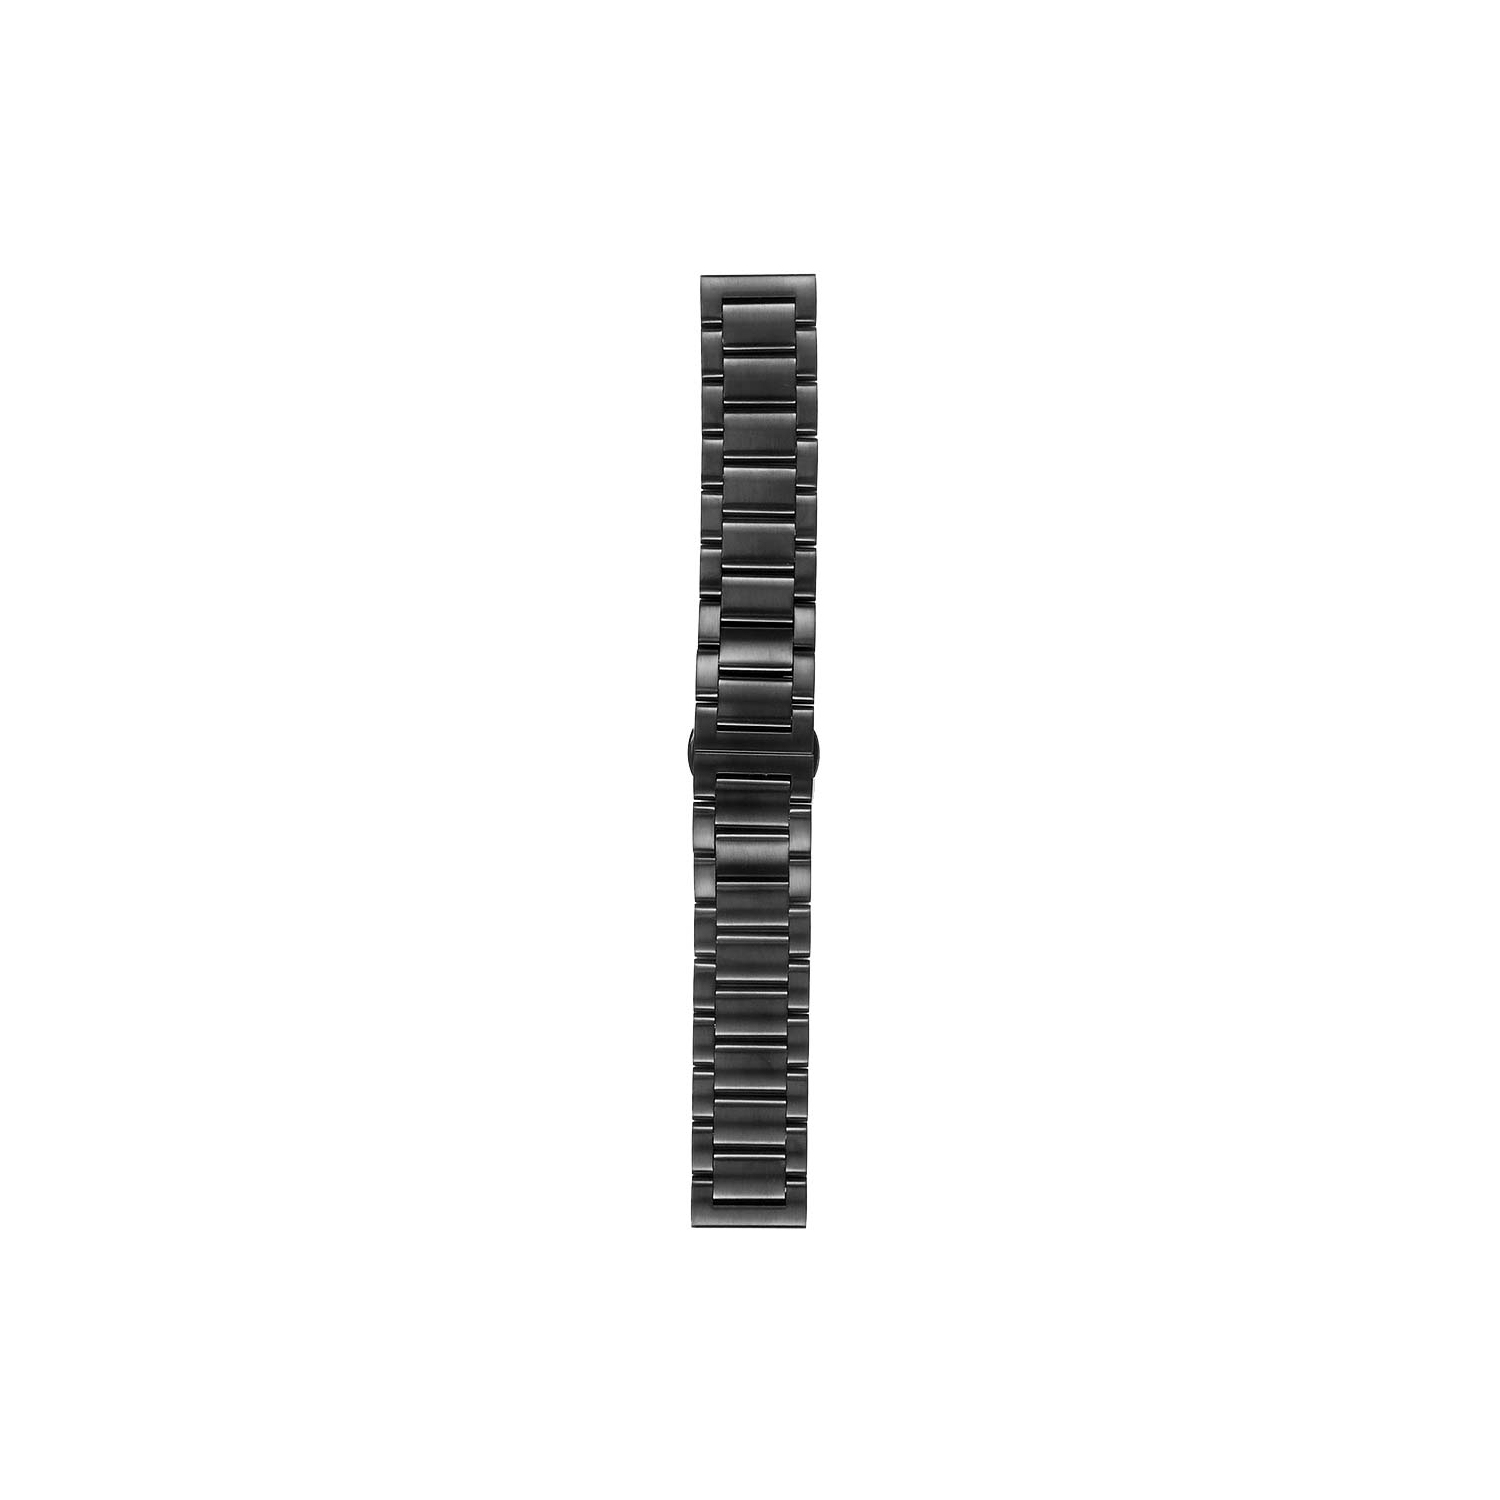 StrapsCo Metal Watch Band Bracelet for Samsung Gear Sport - Black